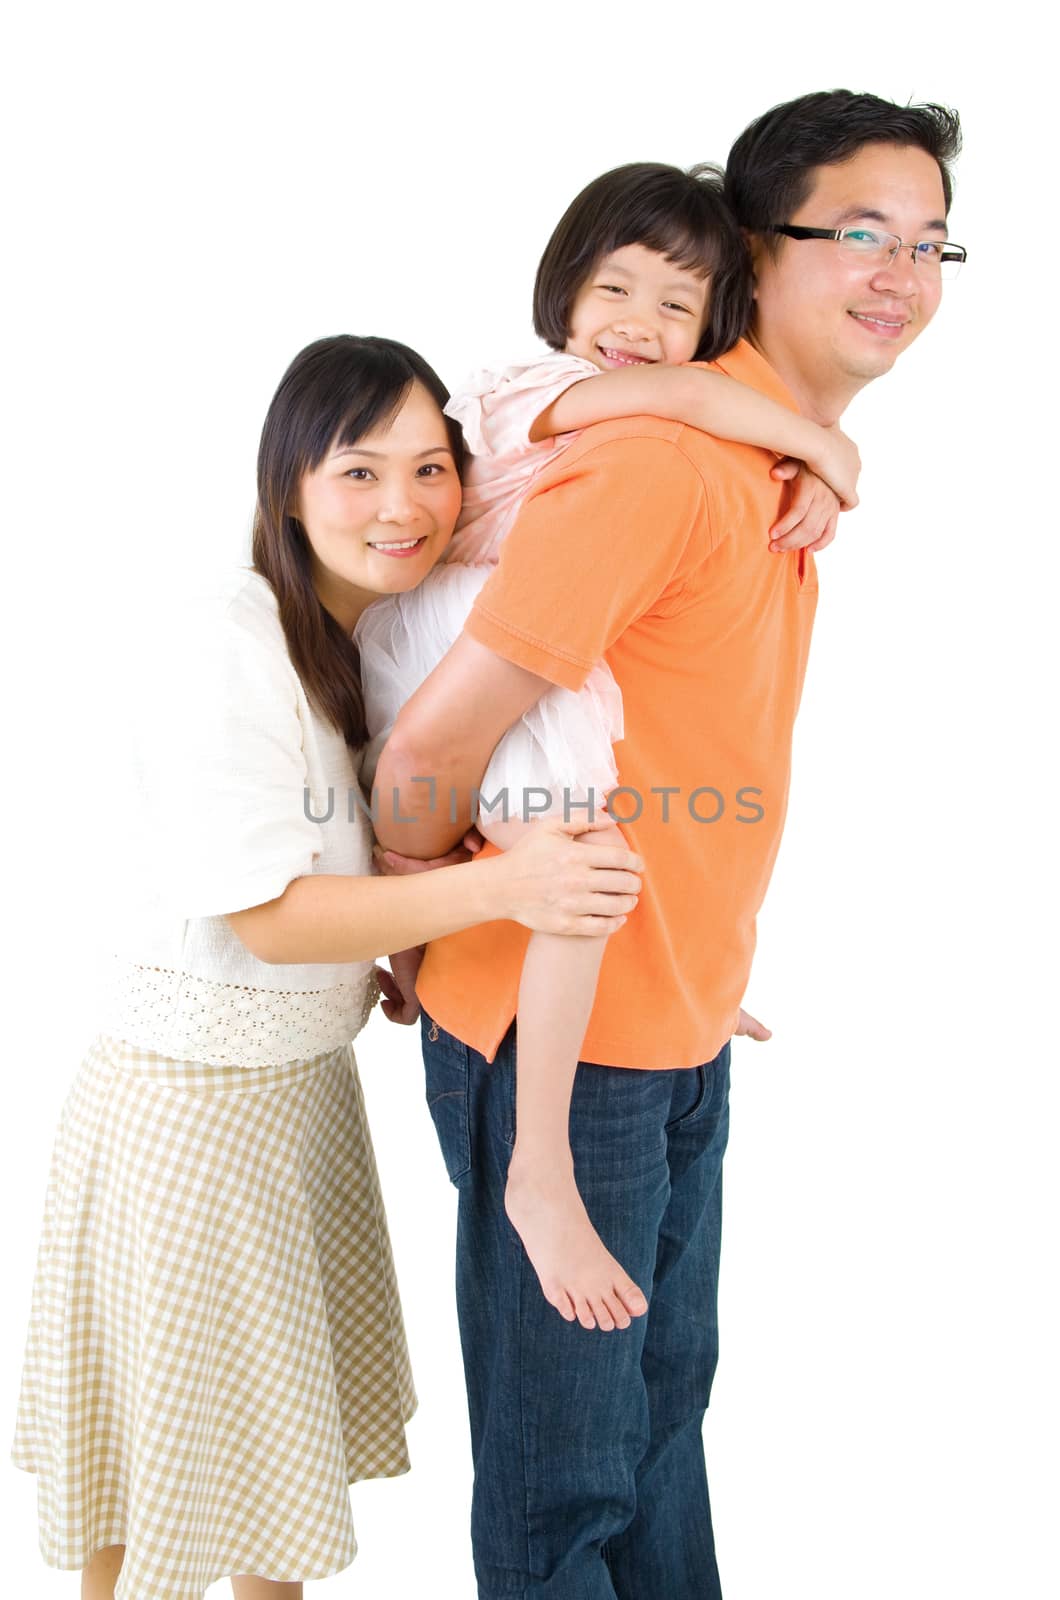 Indoor portrait of beautiful asian family